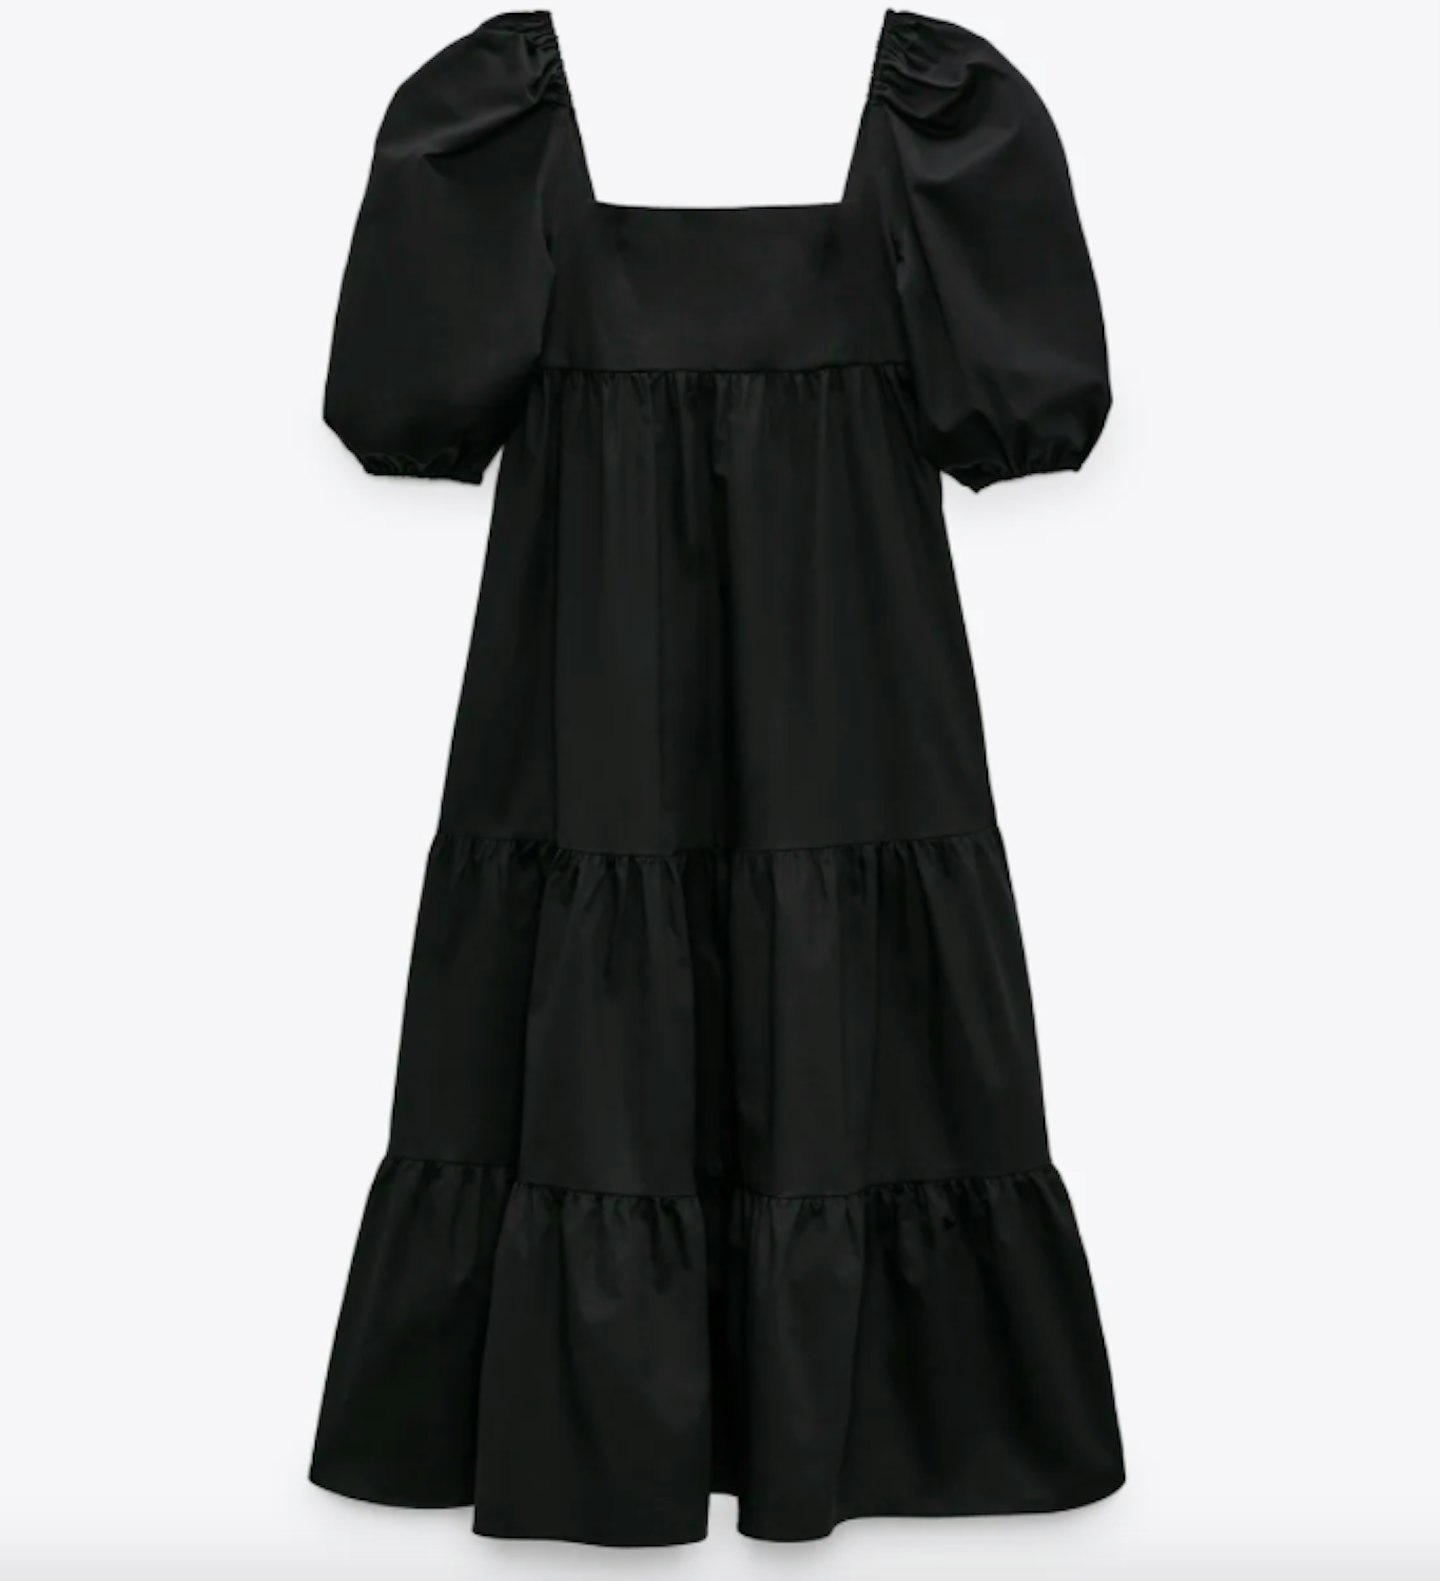 Zara, Midi Dress With Panels, £29.99